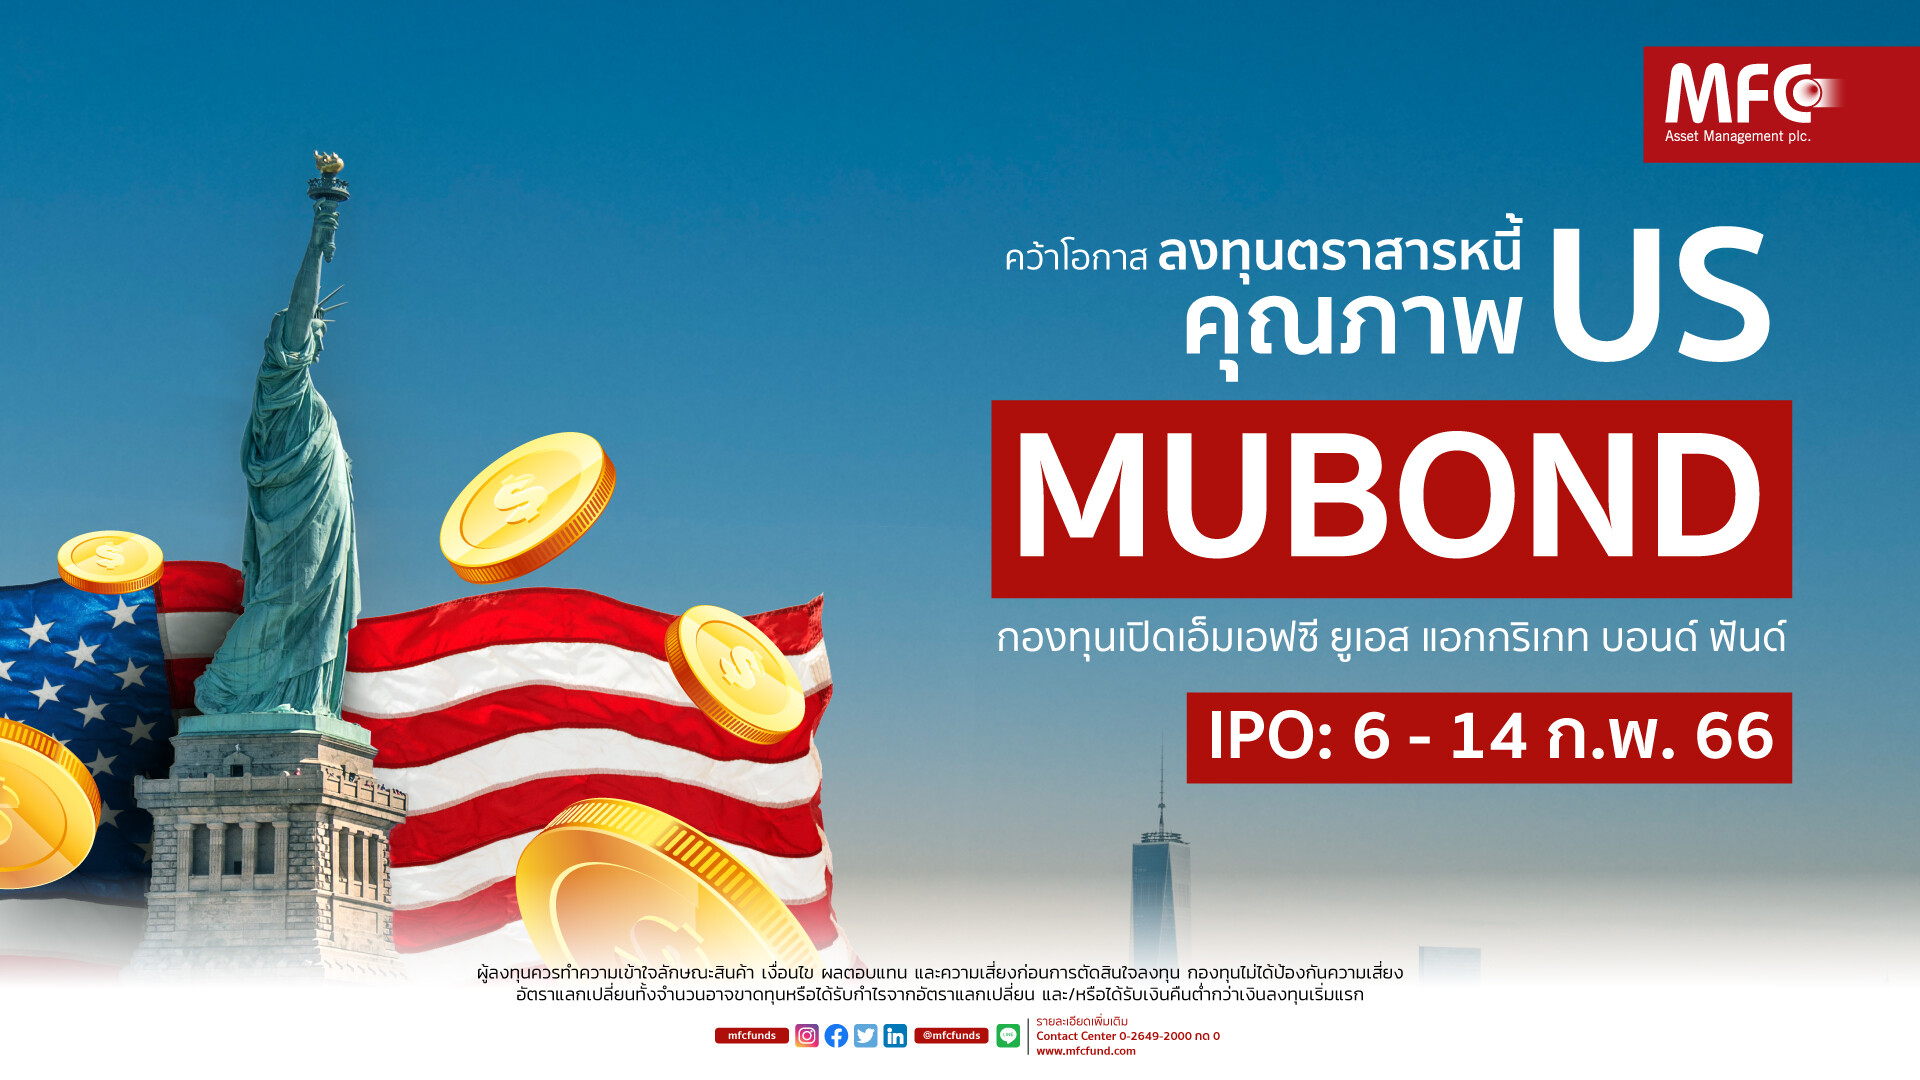 MFC ส่ง "MUBOND" เปิดทางลงทุนตราสารหนี้คุณภาพสูงในตลาดสหรัฐฯ พร้อม IPO 6 - 14 ก.พ.นี้!